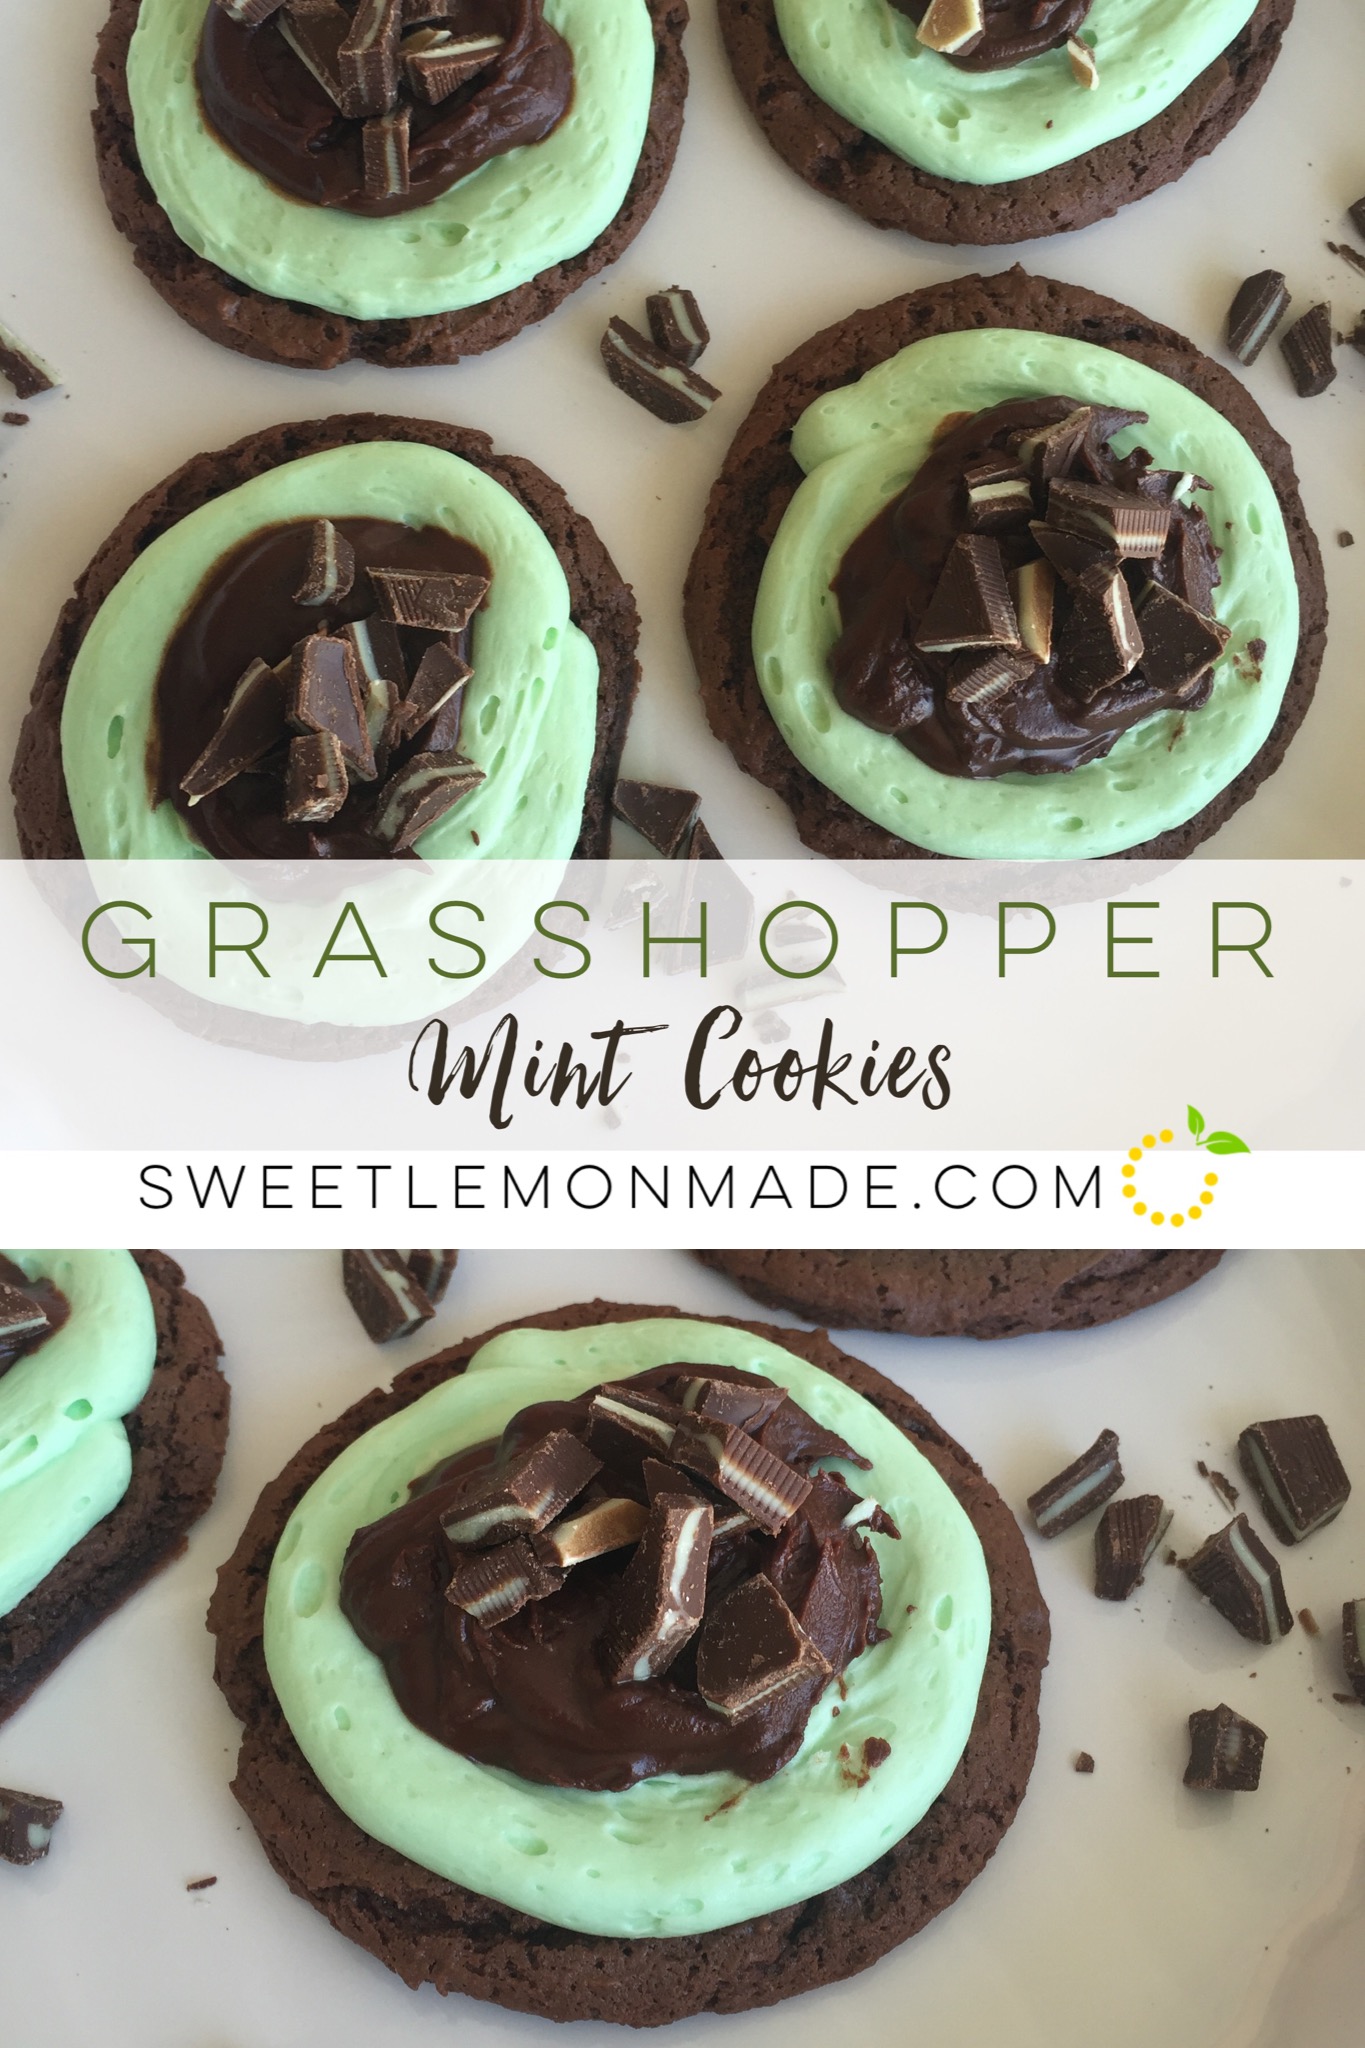 Grasshopper Cookies sweetlemonmade.com